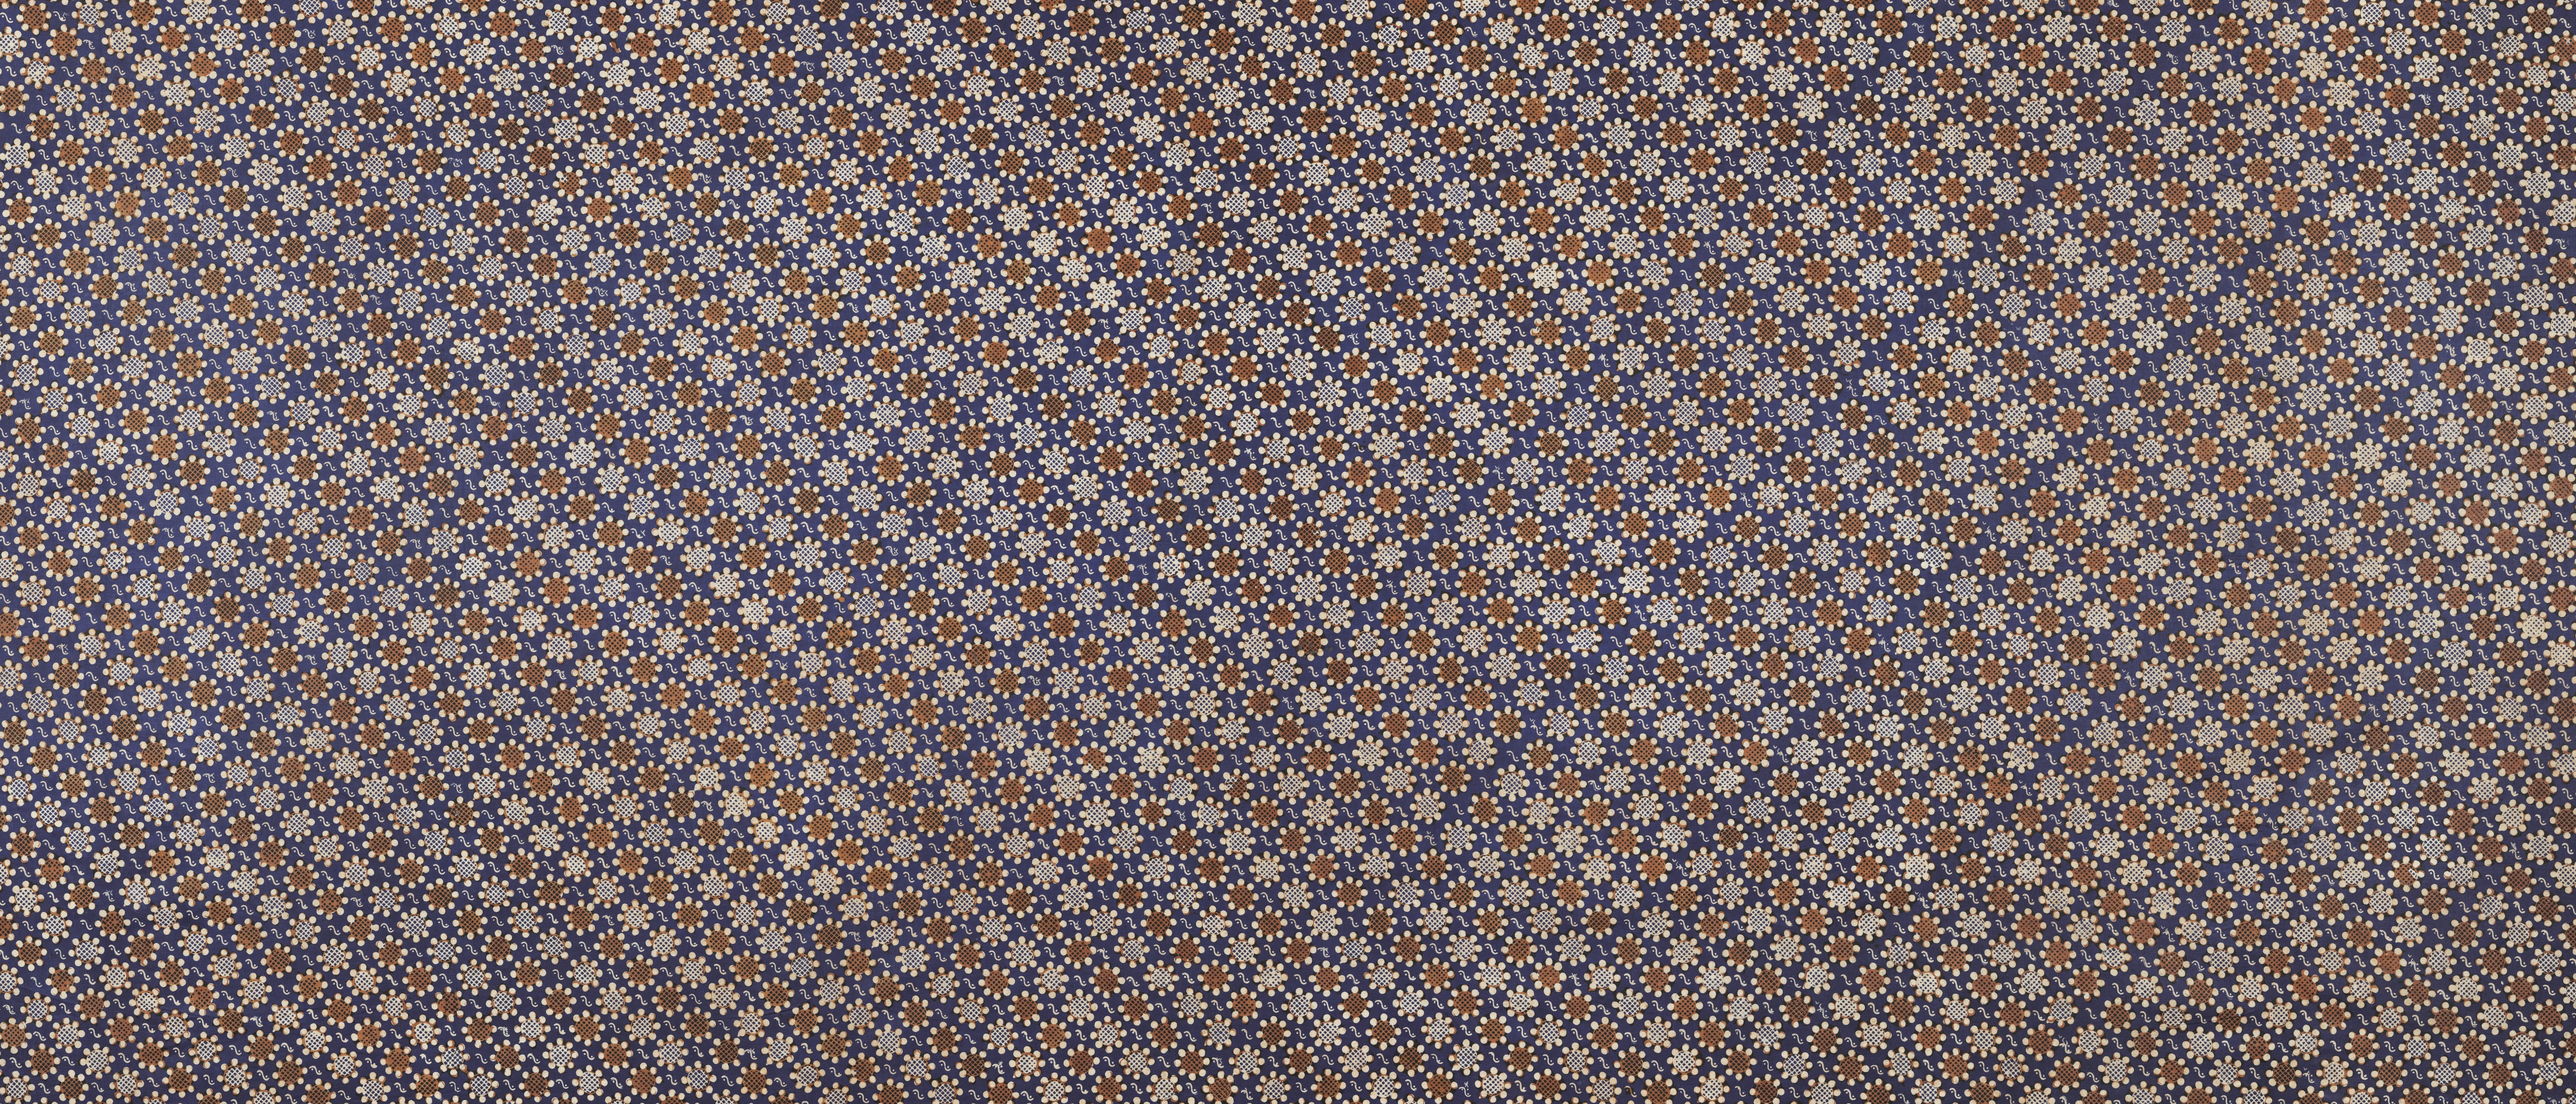 Ultra Wide Ultrawide Fabric Texture Pattern Symmetry 6288x2695